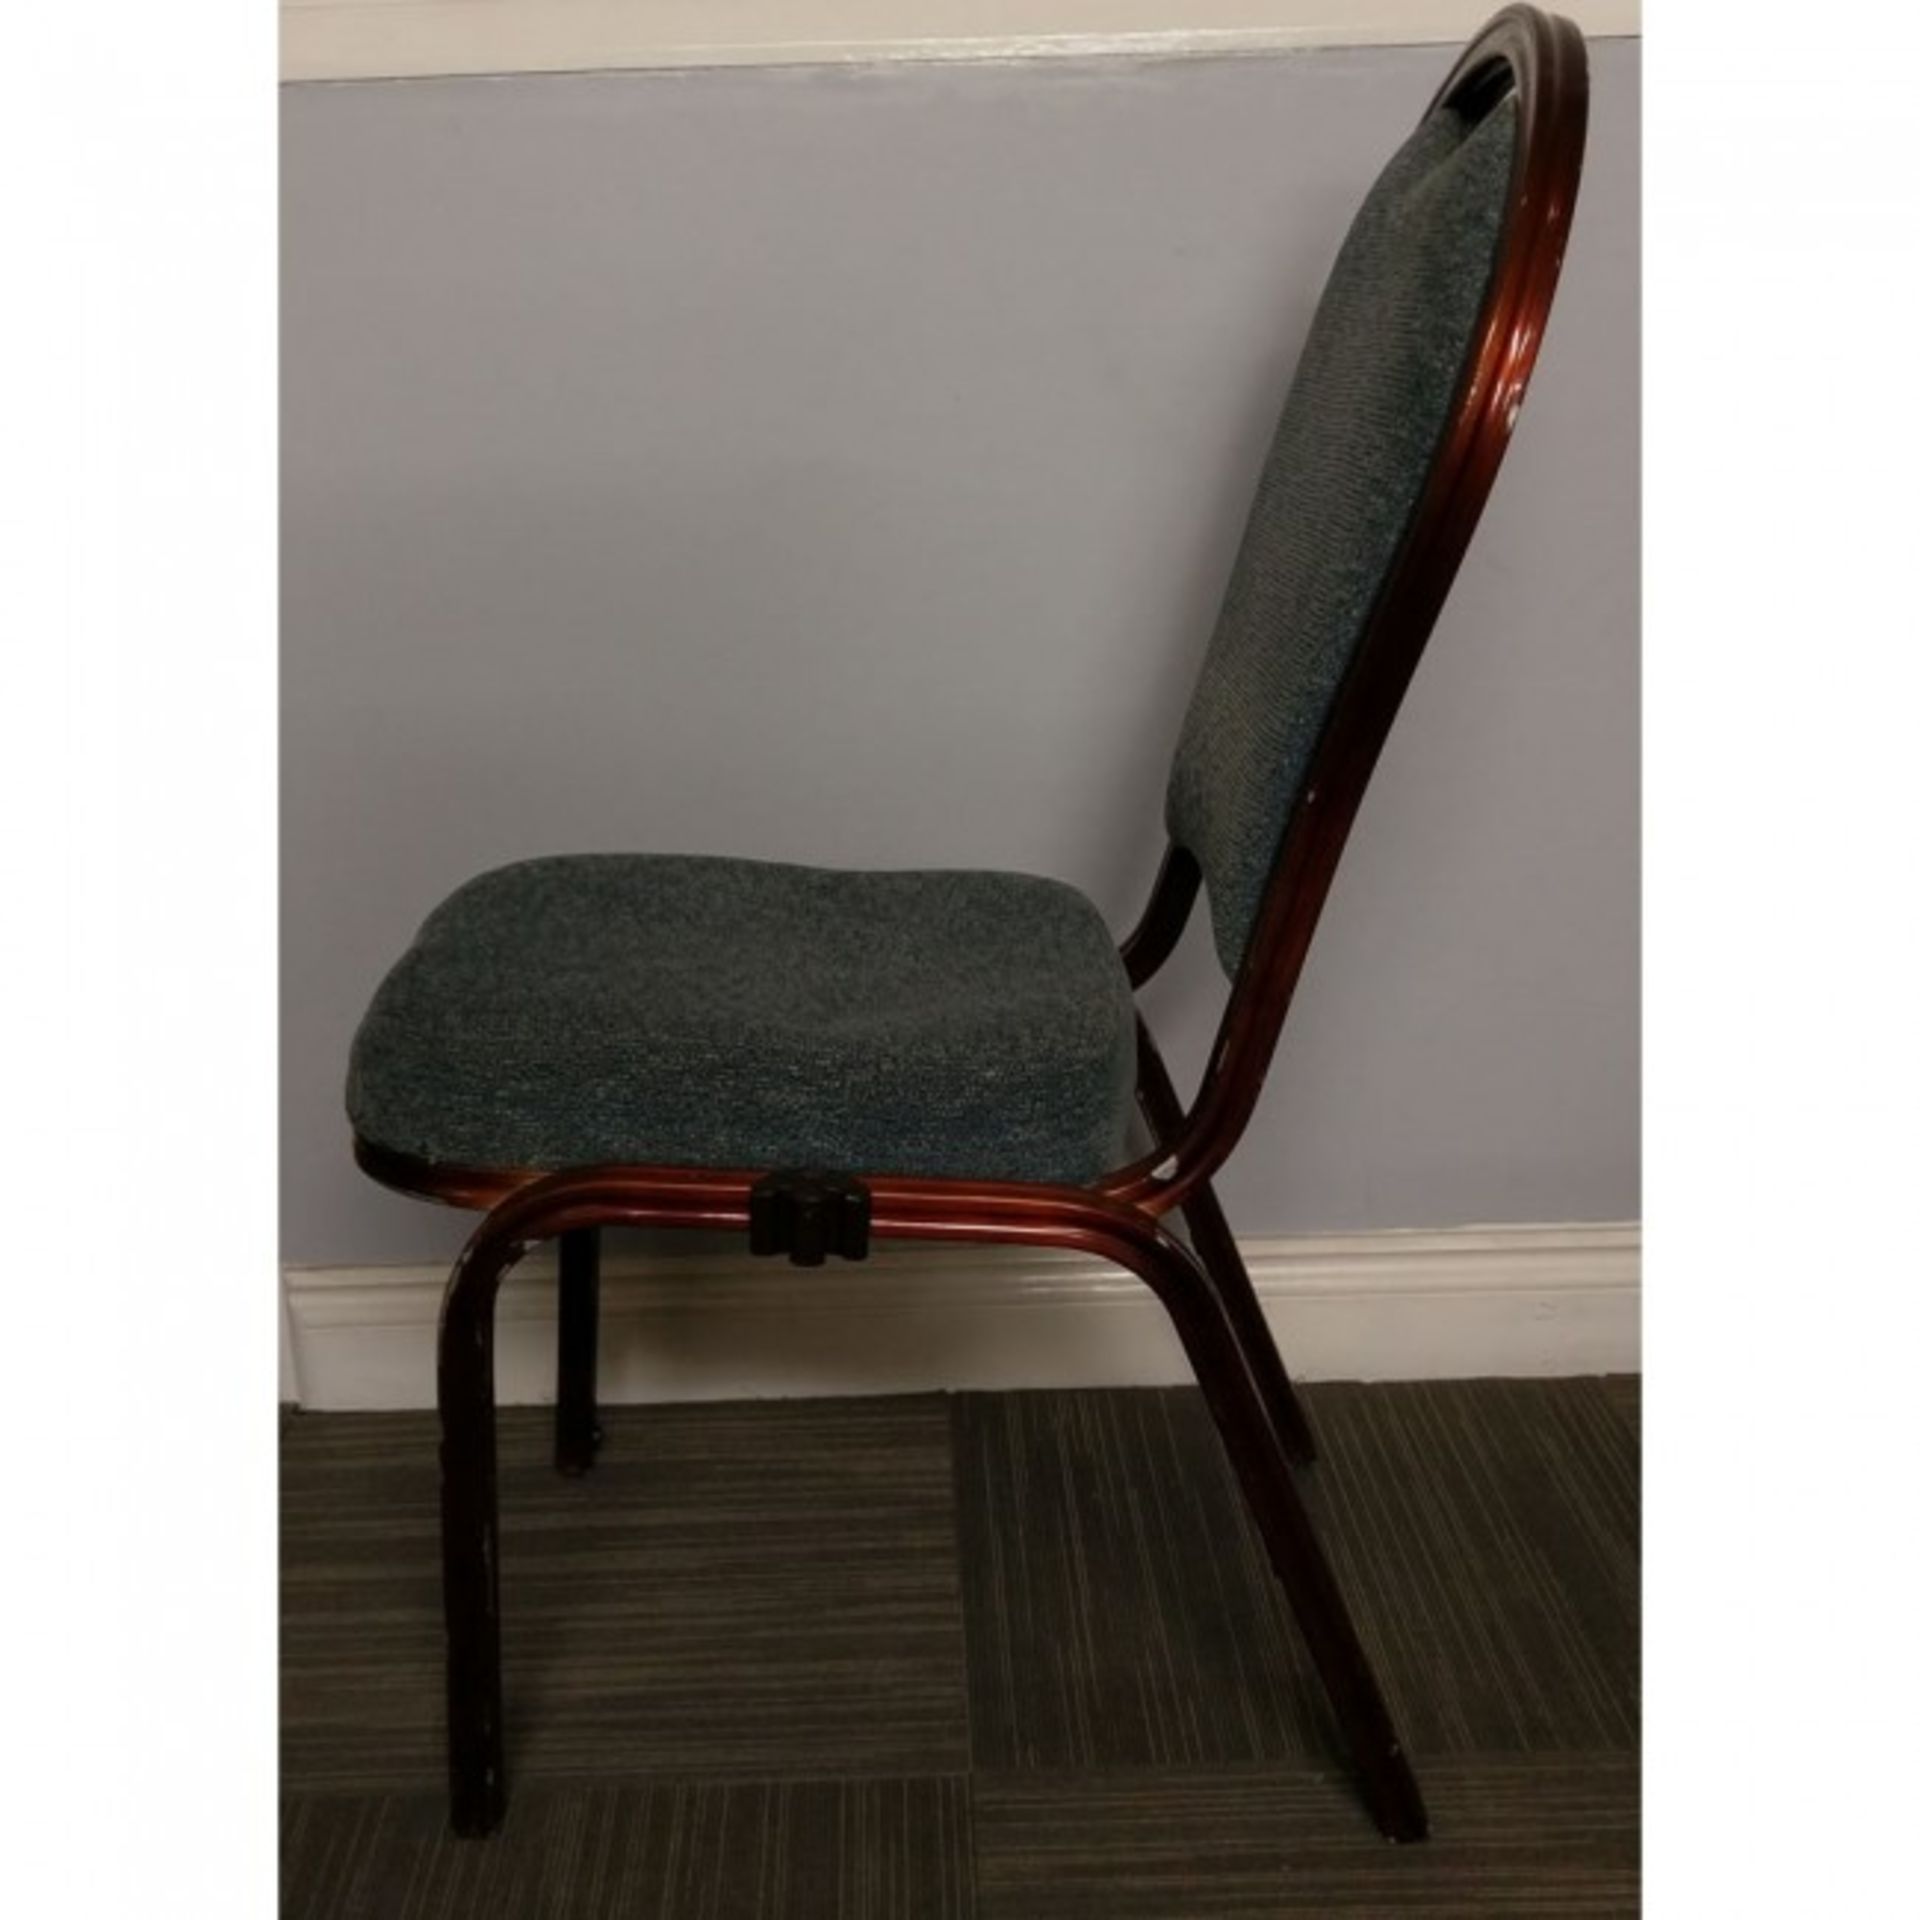 10 x Grey Banquet Chair - Ex Hotel Stock - Aluminium Frame - Image 3 of 4